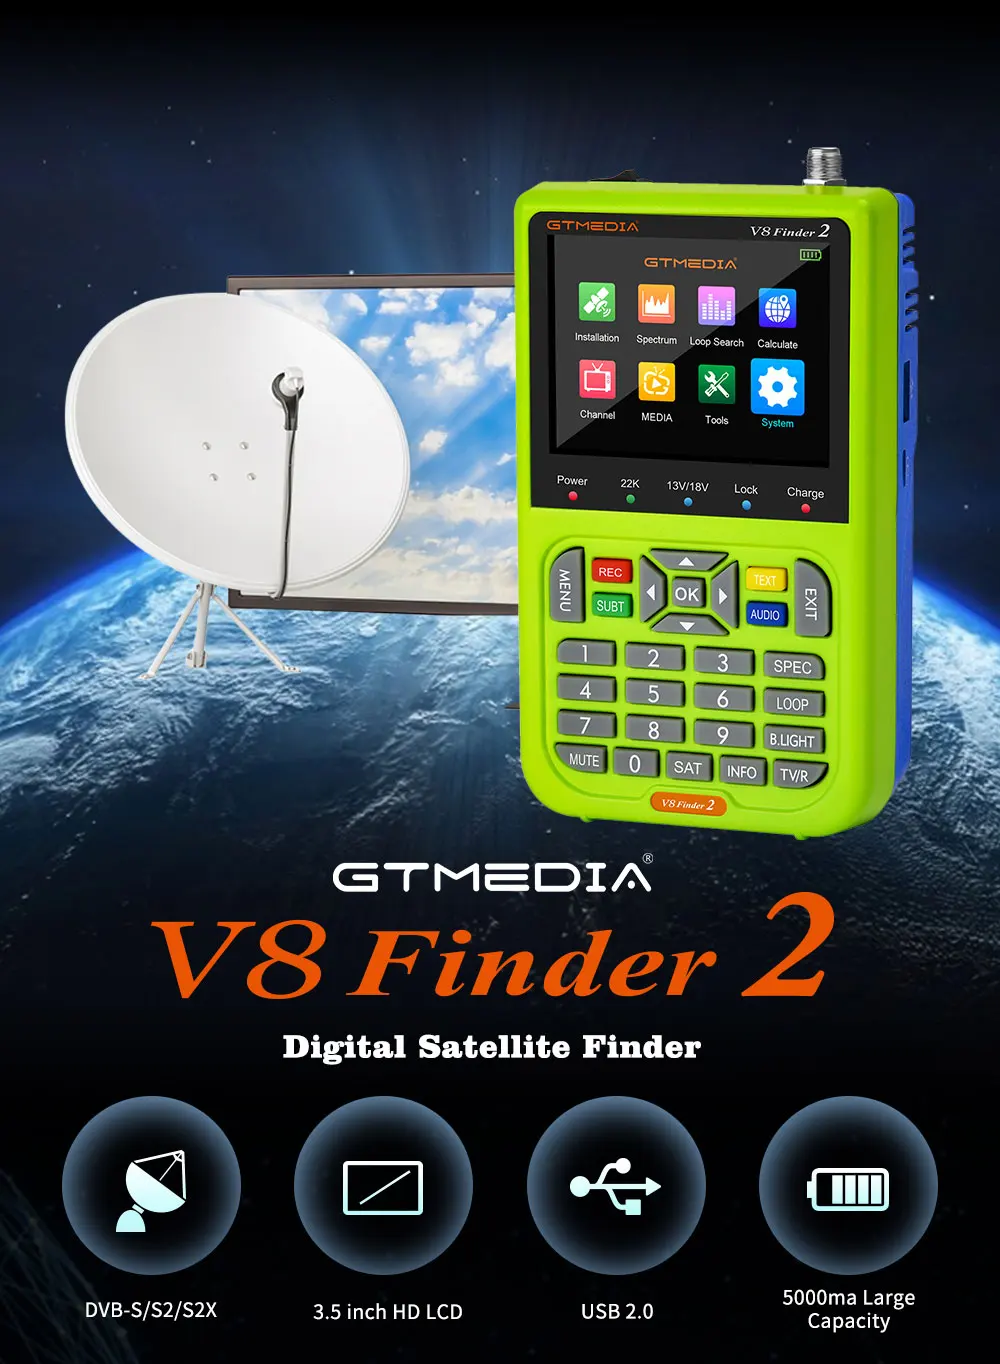 GTMEDIA V8 Finder 2 Satellite Signal Finder DVB-S/S2/S2X Digital 1080P HD H.264 VS ST-5150 V8 FINDER PRO WS6933 WS6980 In Stock cbs antenna channel